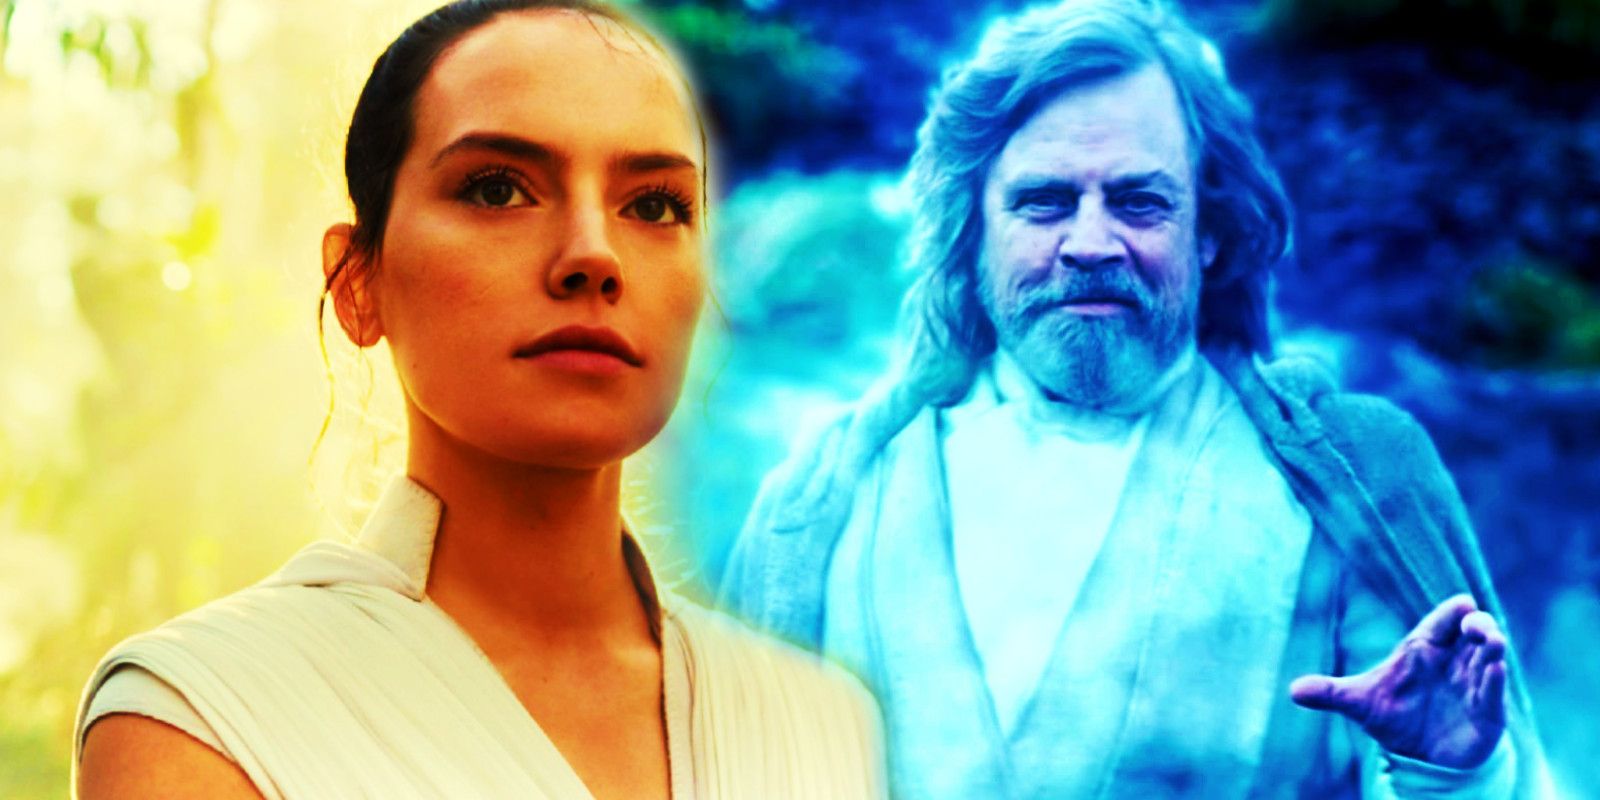 Daisy Ridley as Rey and Mark Hamill as Luke Skywalker (Force ghost) in Rise of Skywalker 